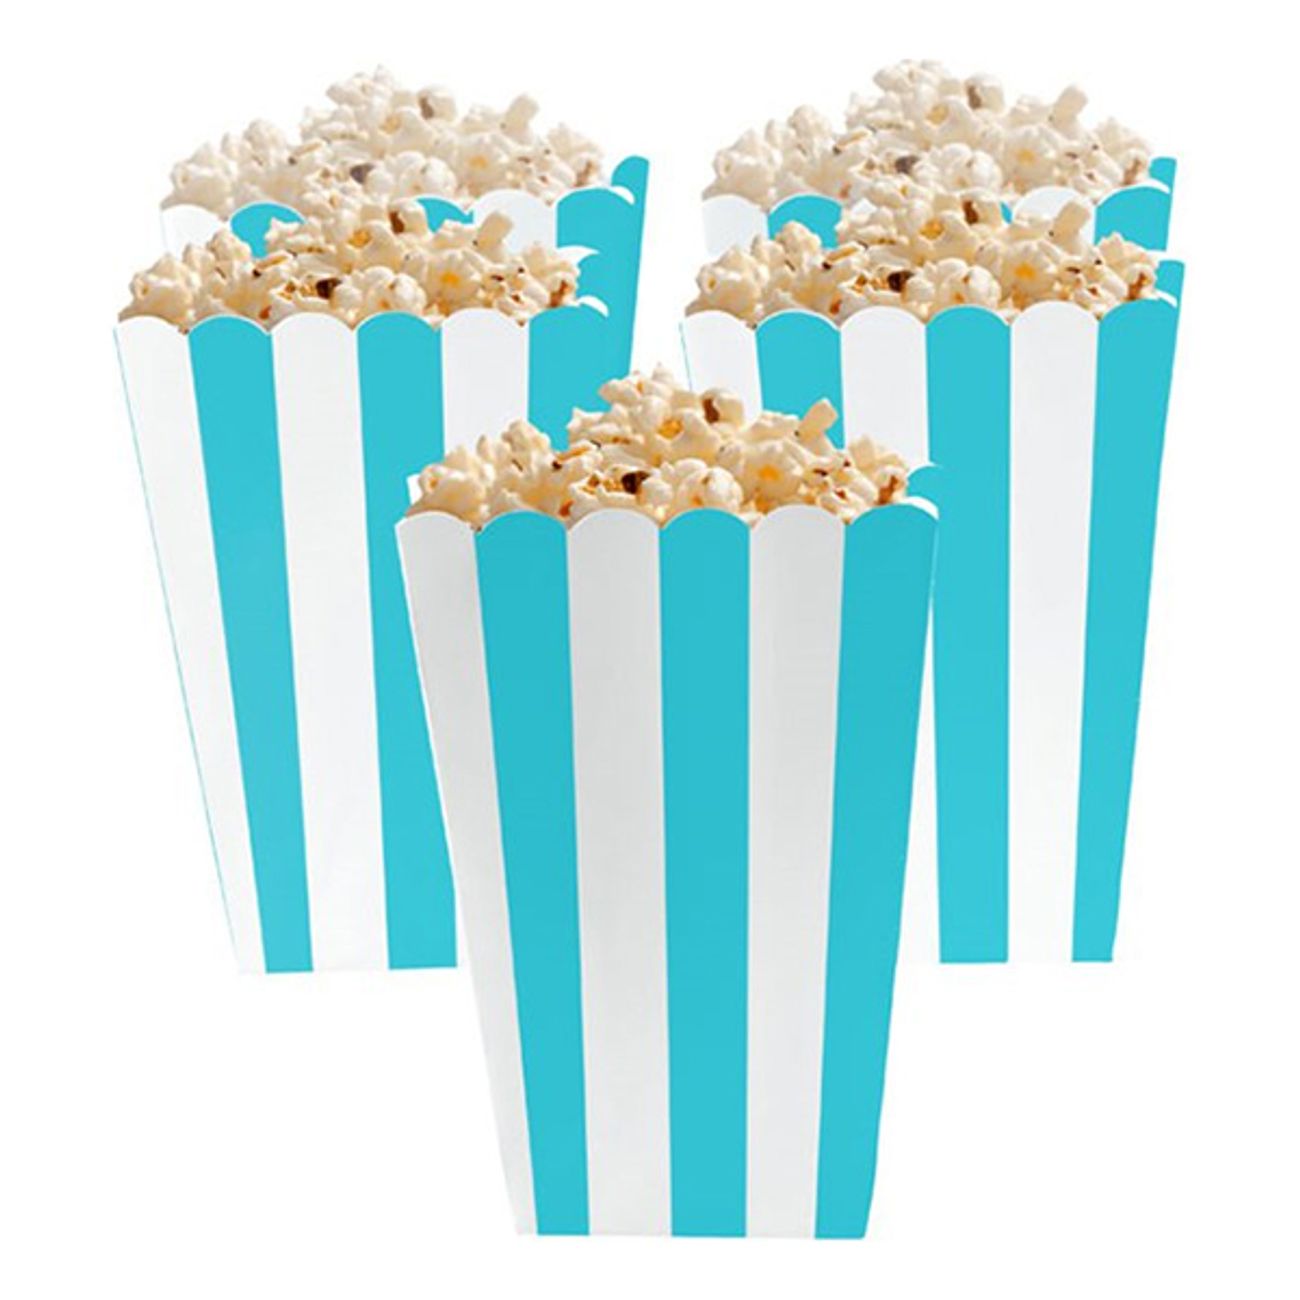 popcornbagare-turkos-randiga-1